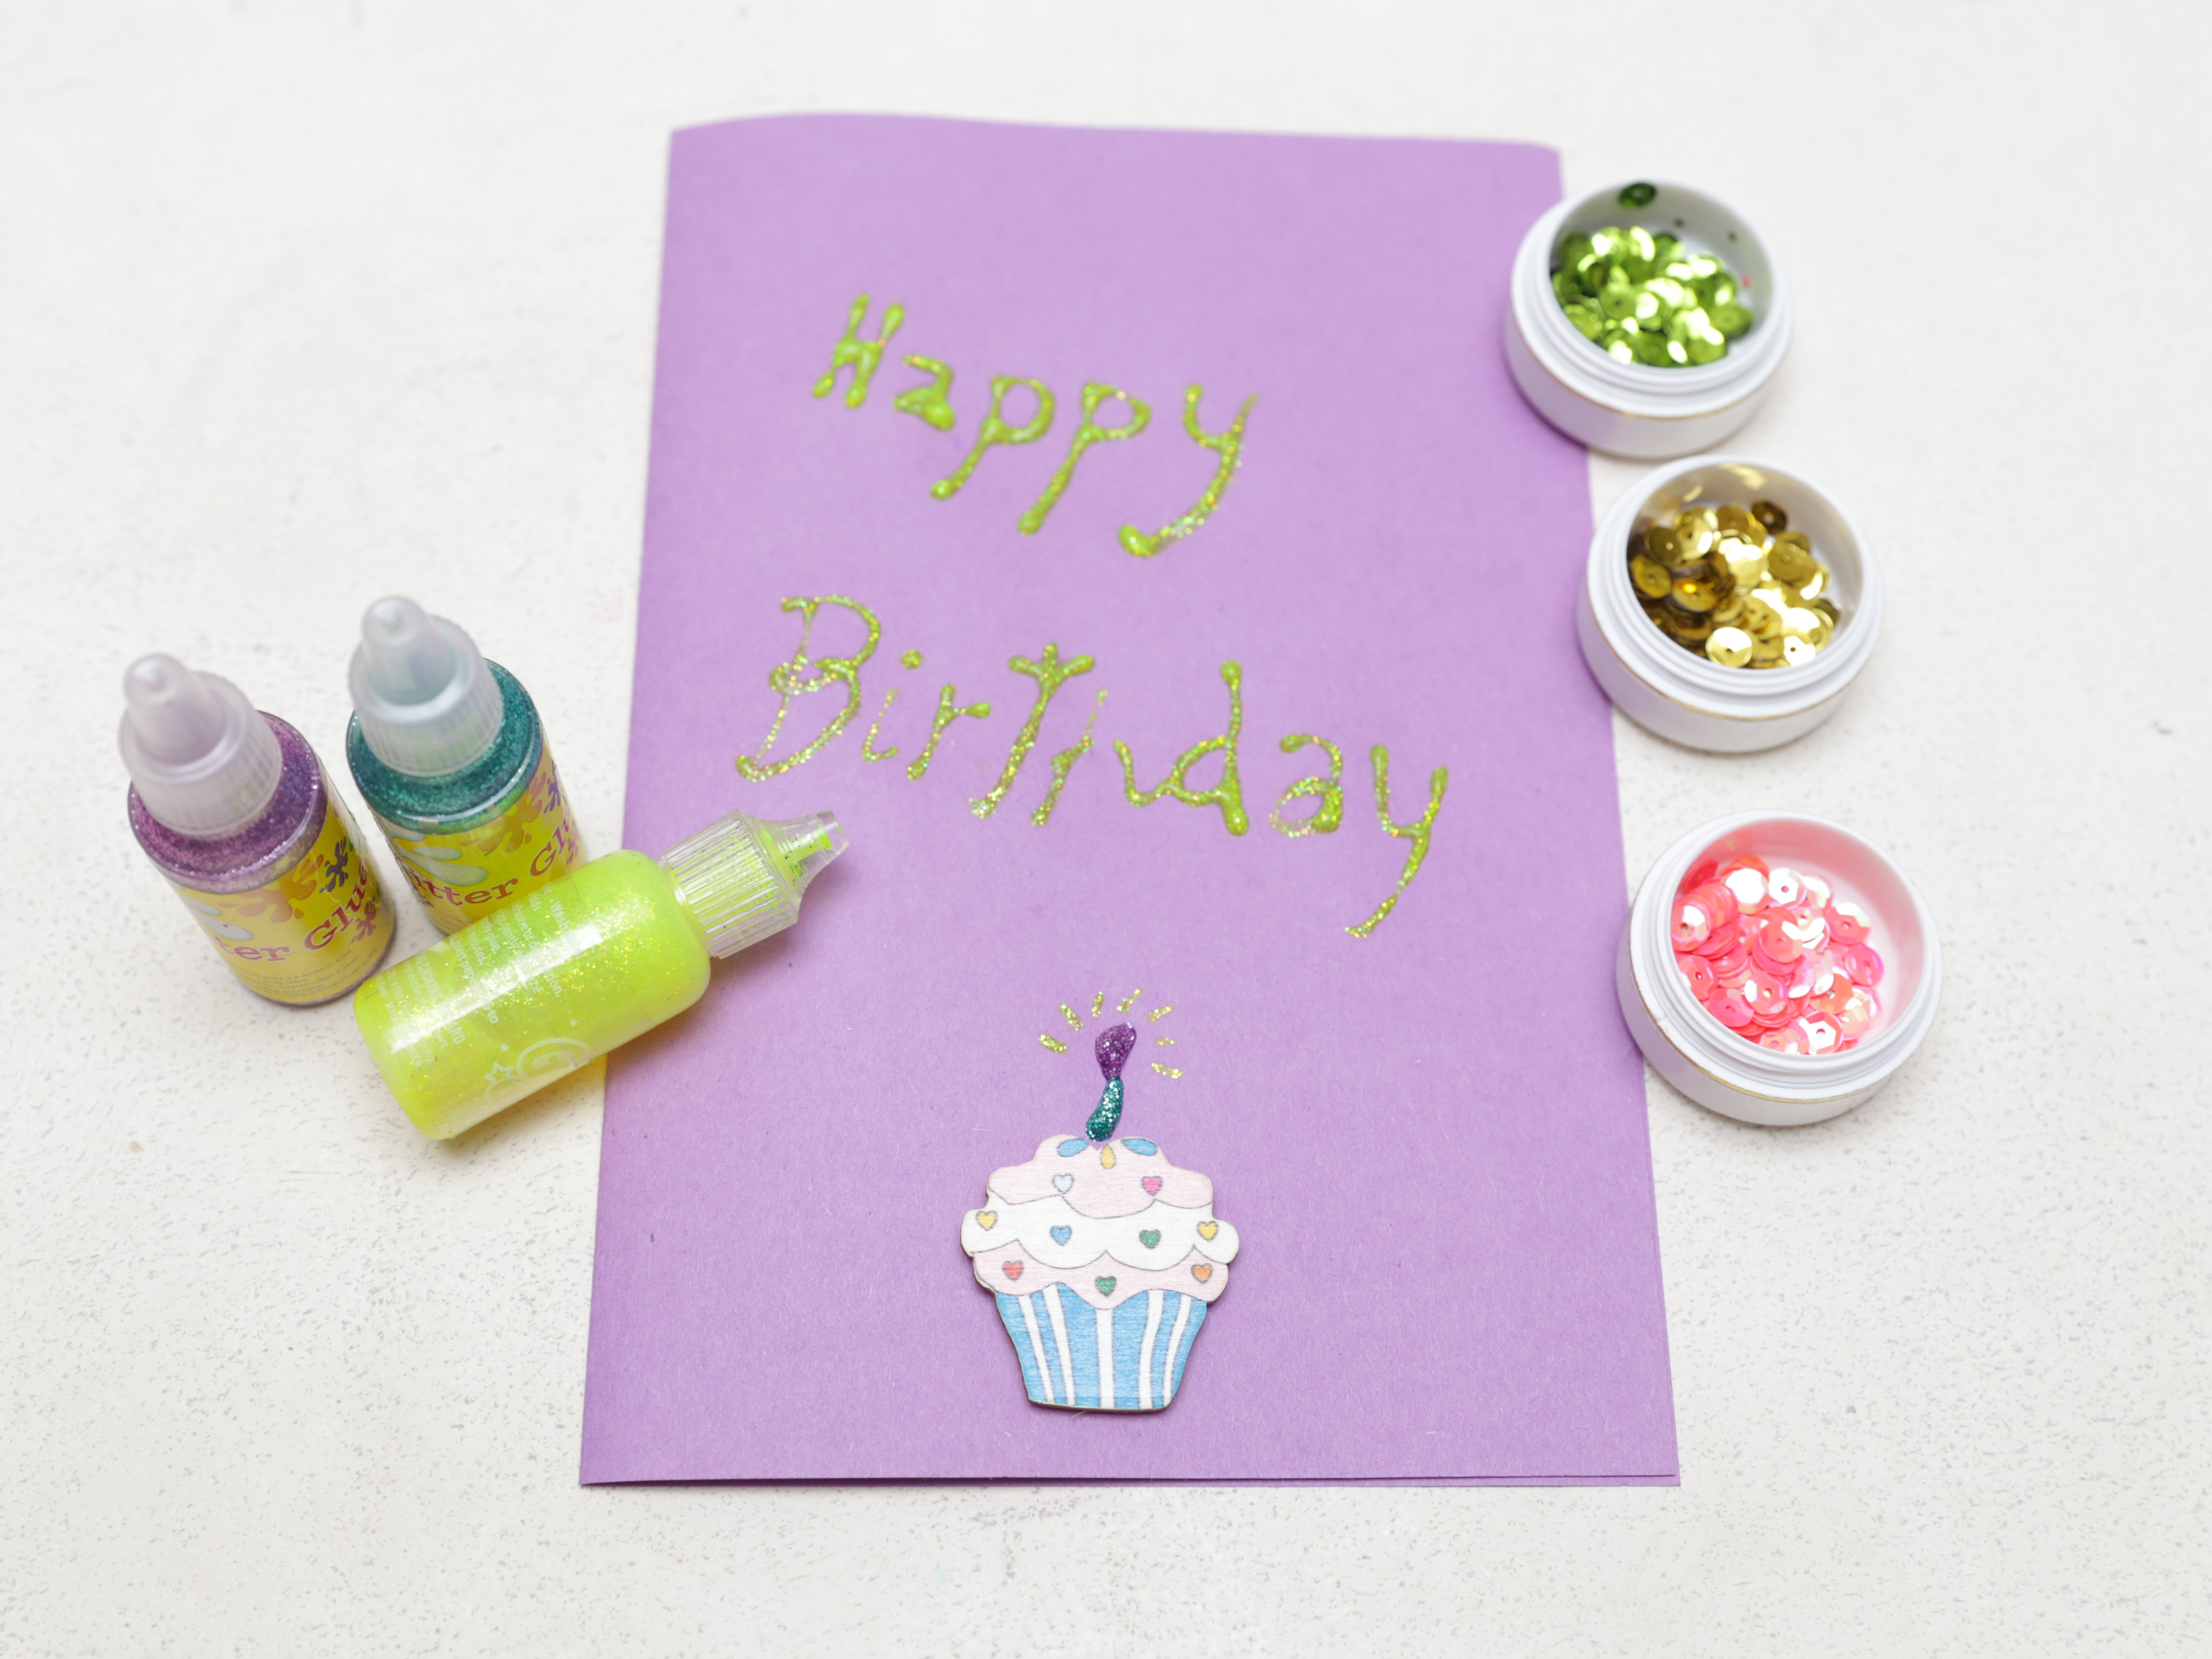 Scrapbooking Birthday Card Ideas How To Make A Simple Handmade Birthday Card 15 Steps